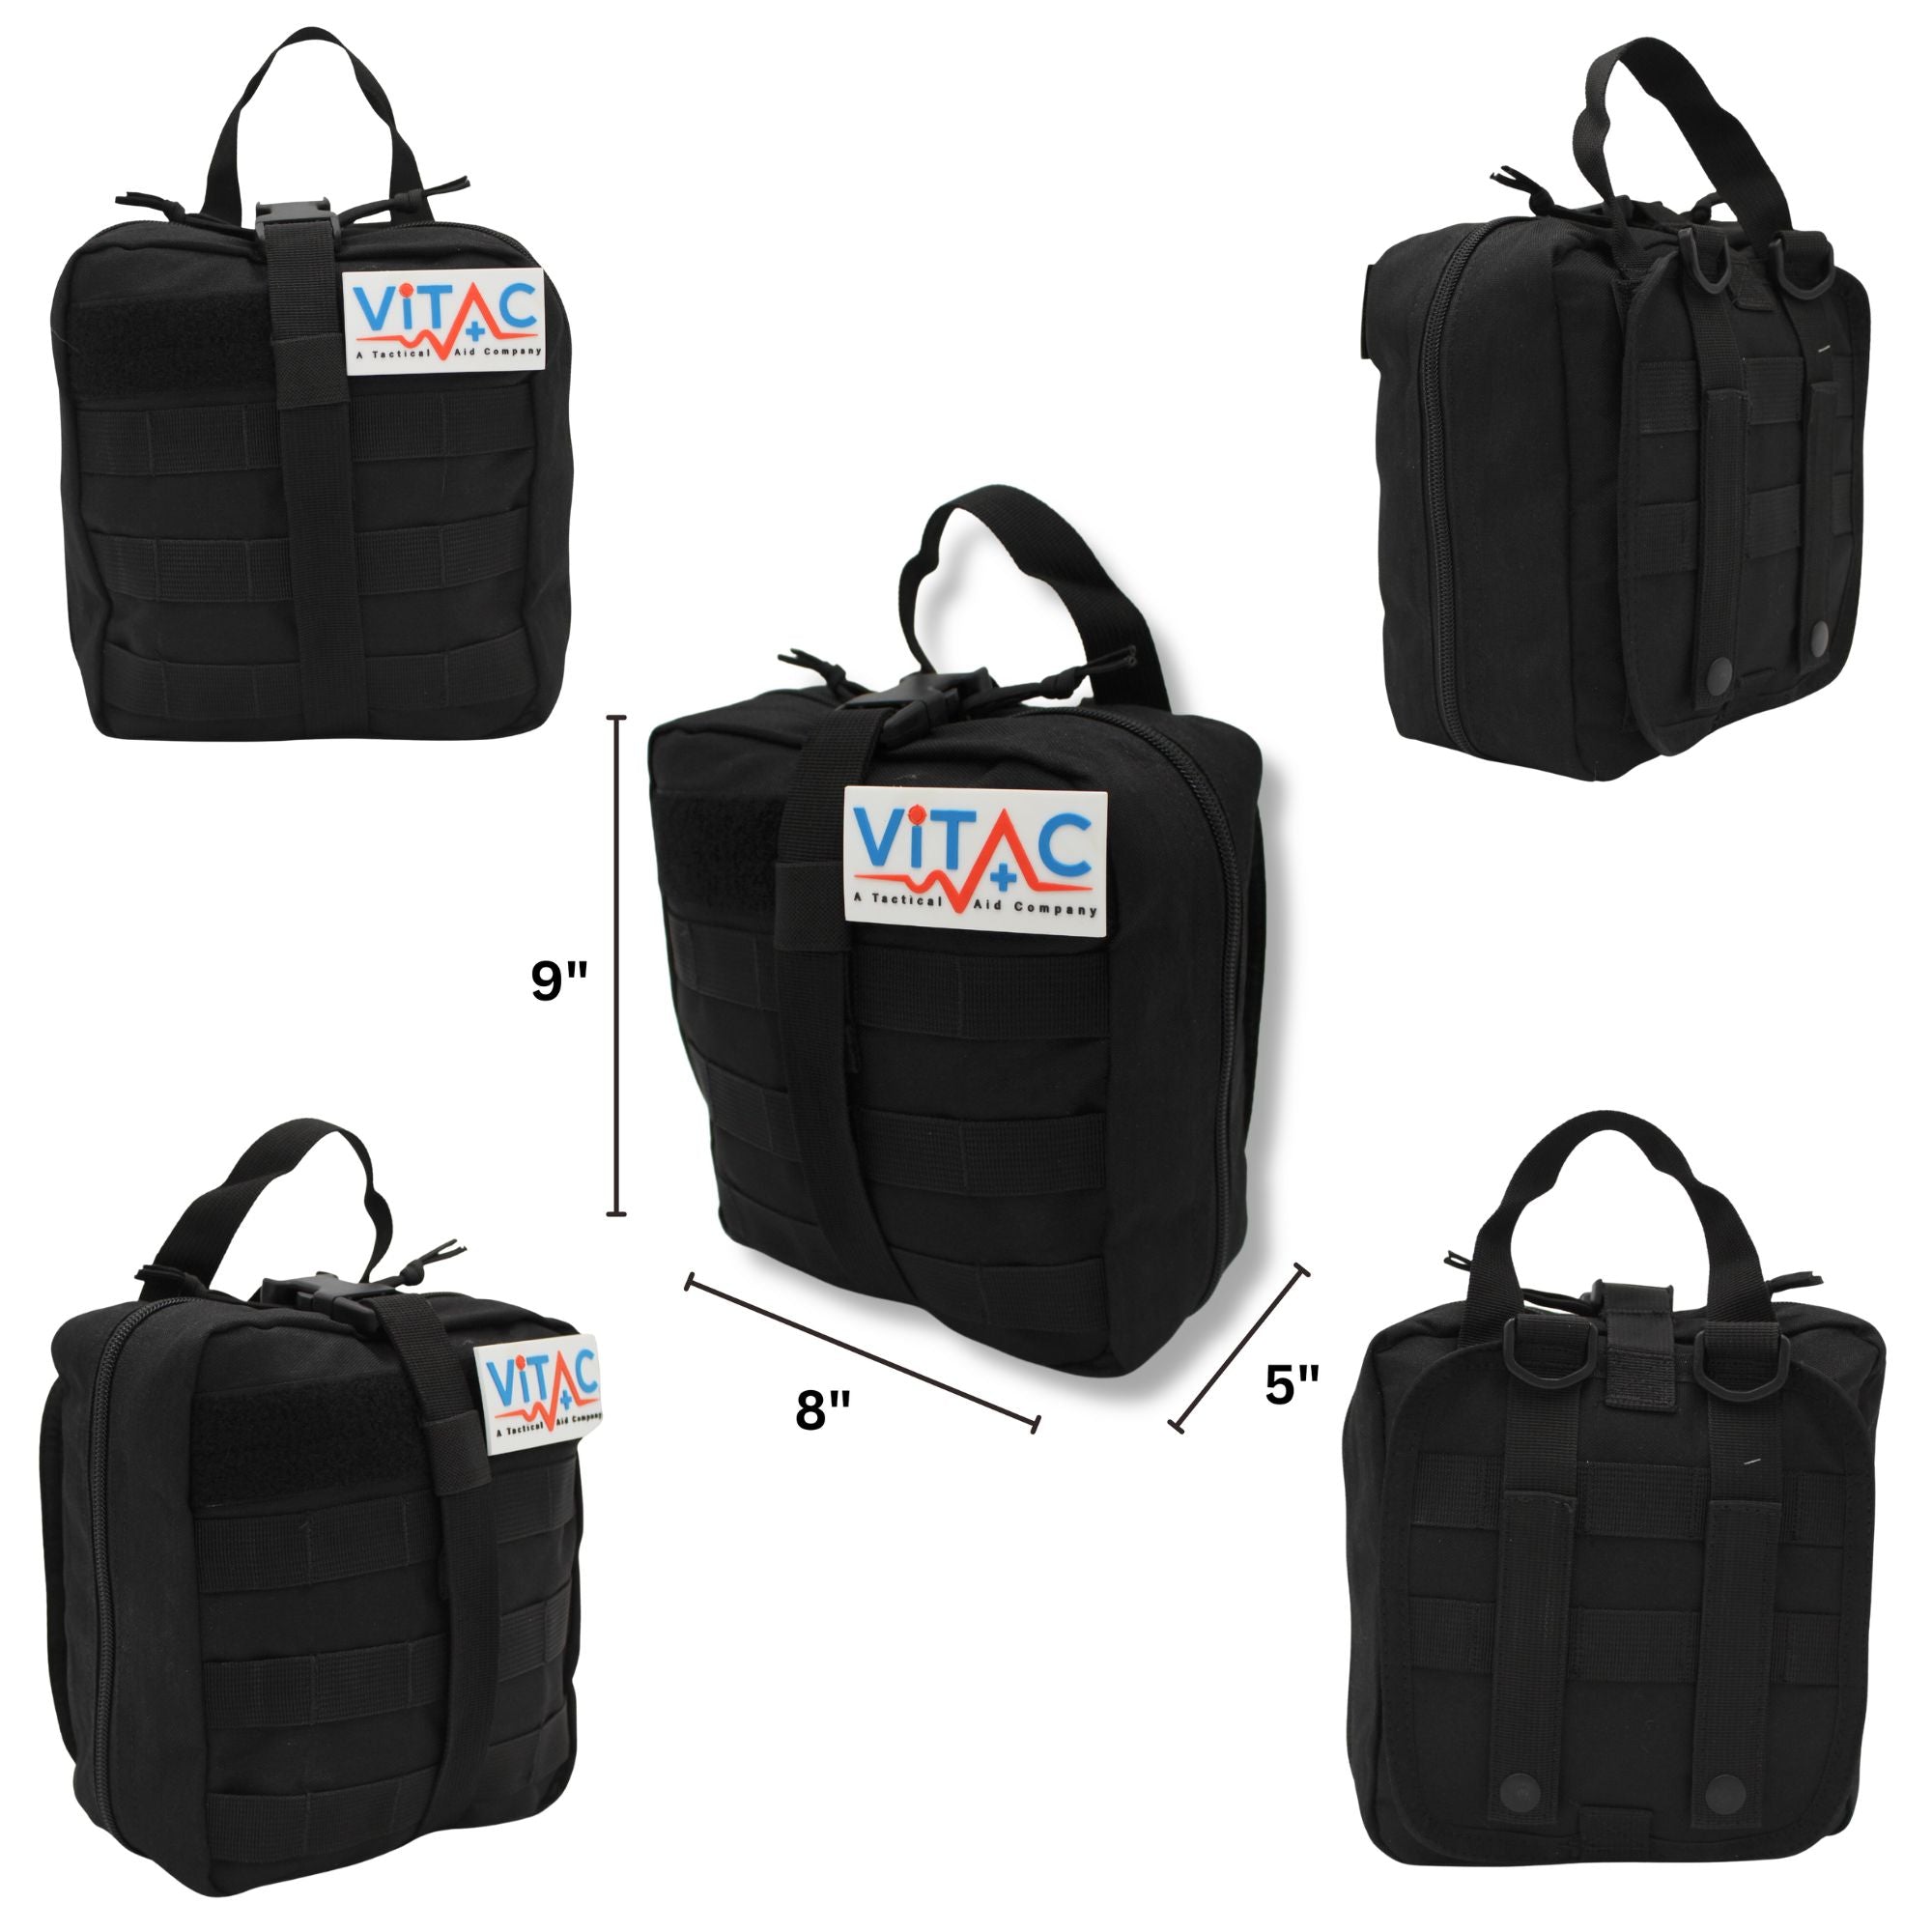 ViTAC Adventurer First Aid Kit, Black, All Sides